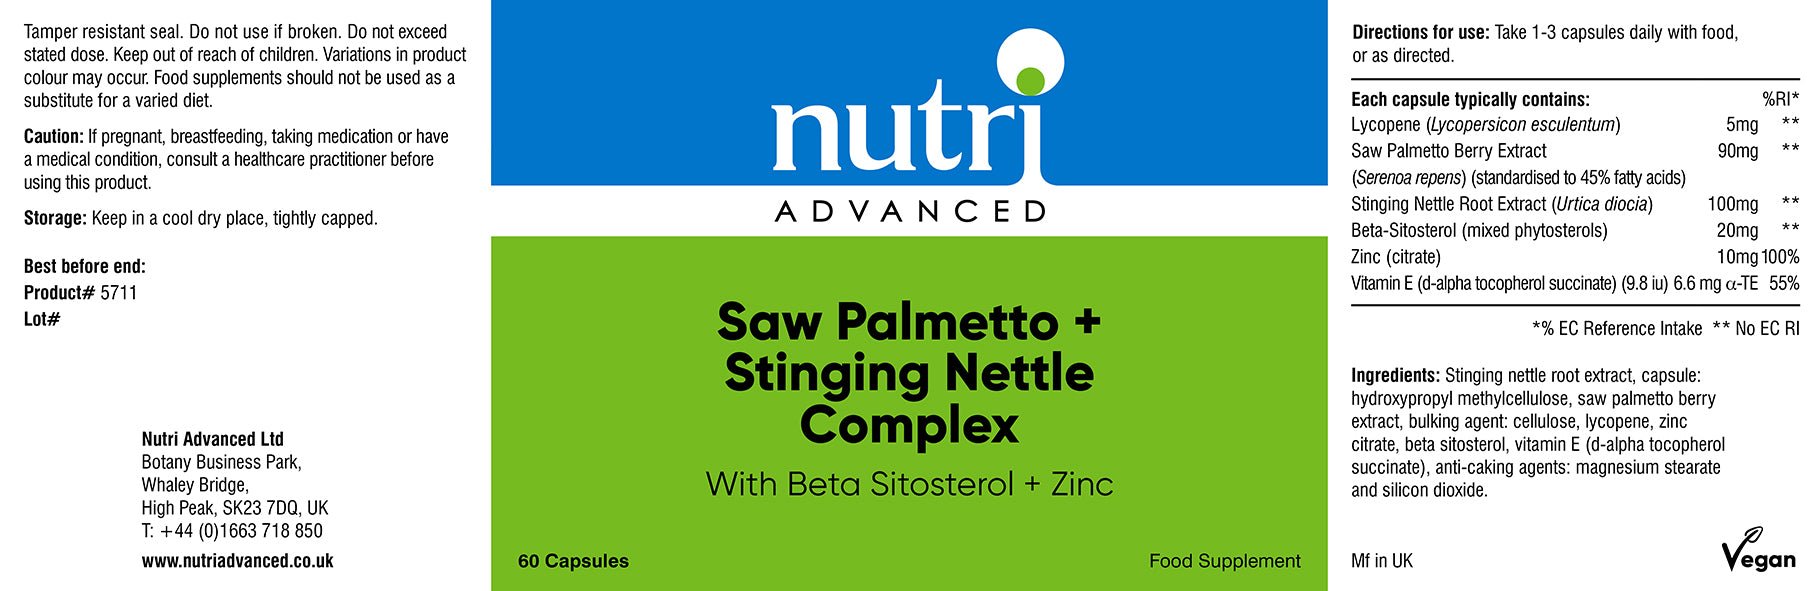 Saw Palmetto & Stinging Nettle Complex